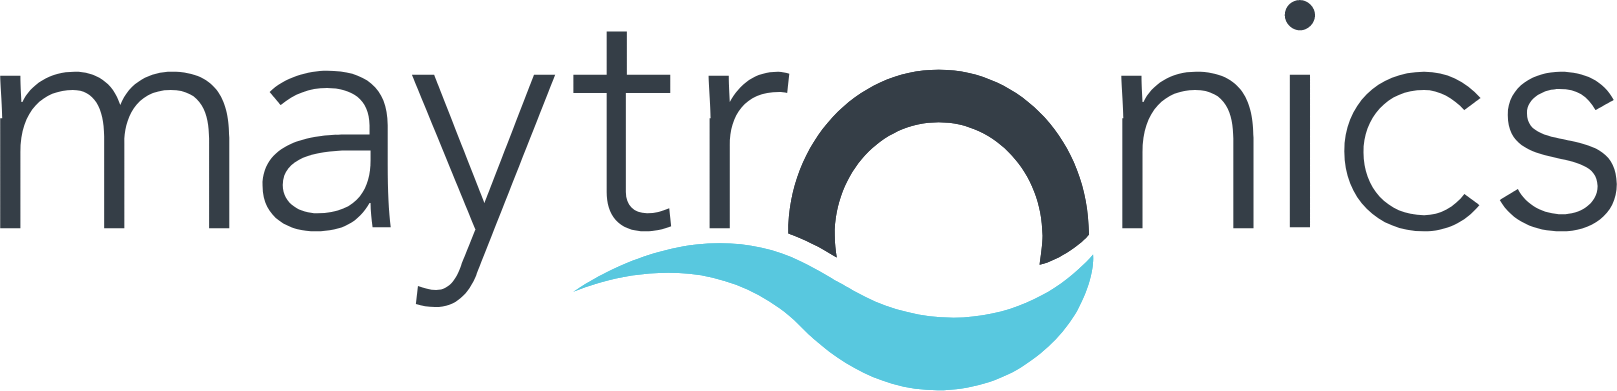 Maytronics logo large (transparent PNG)